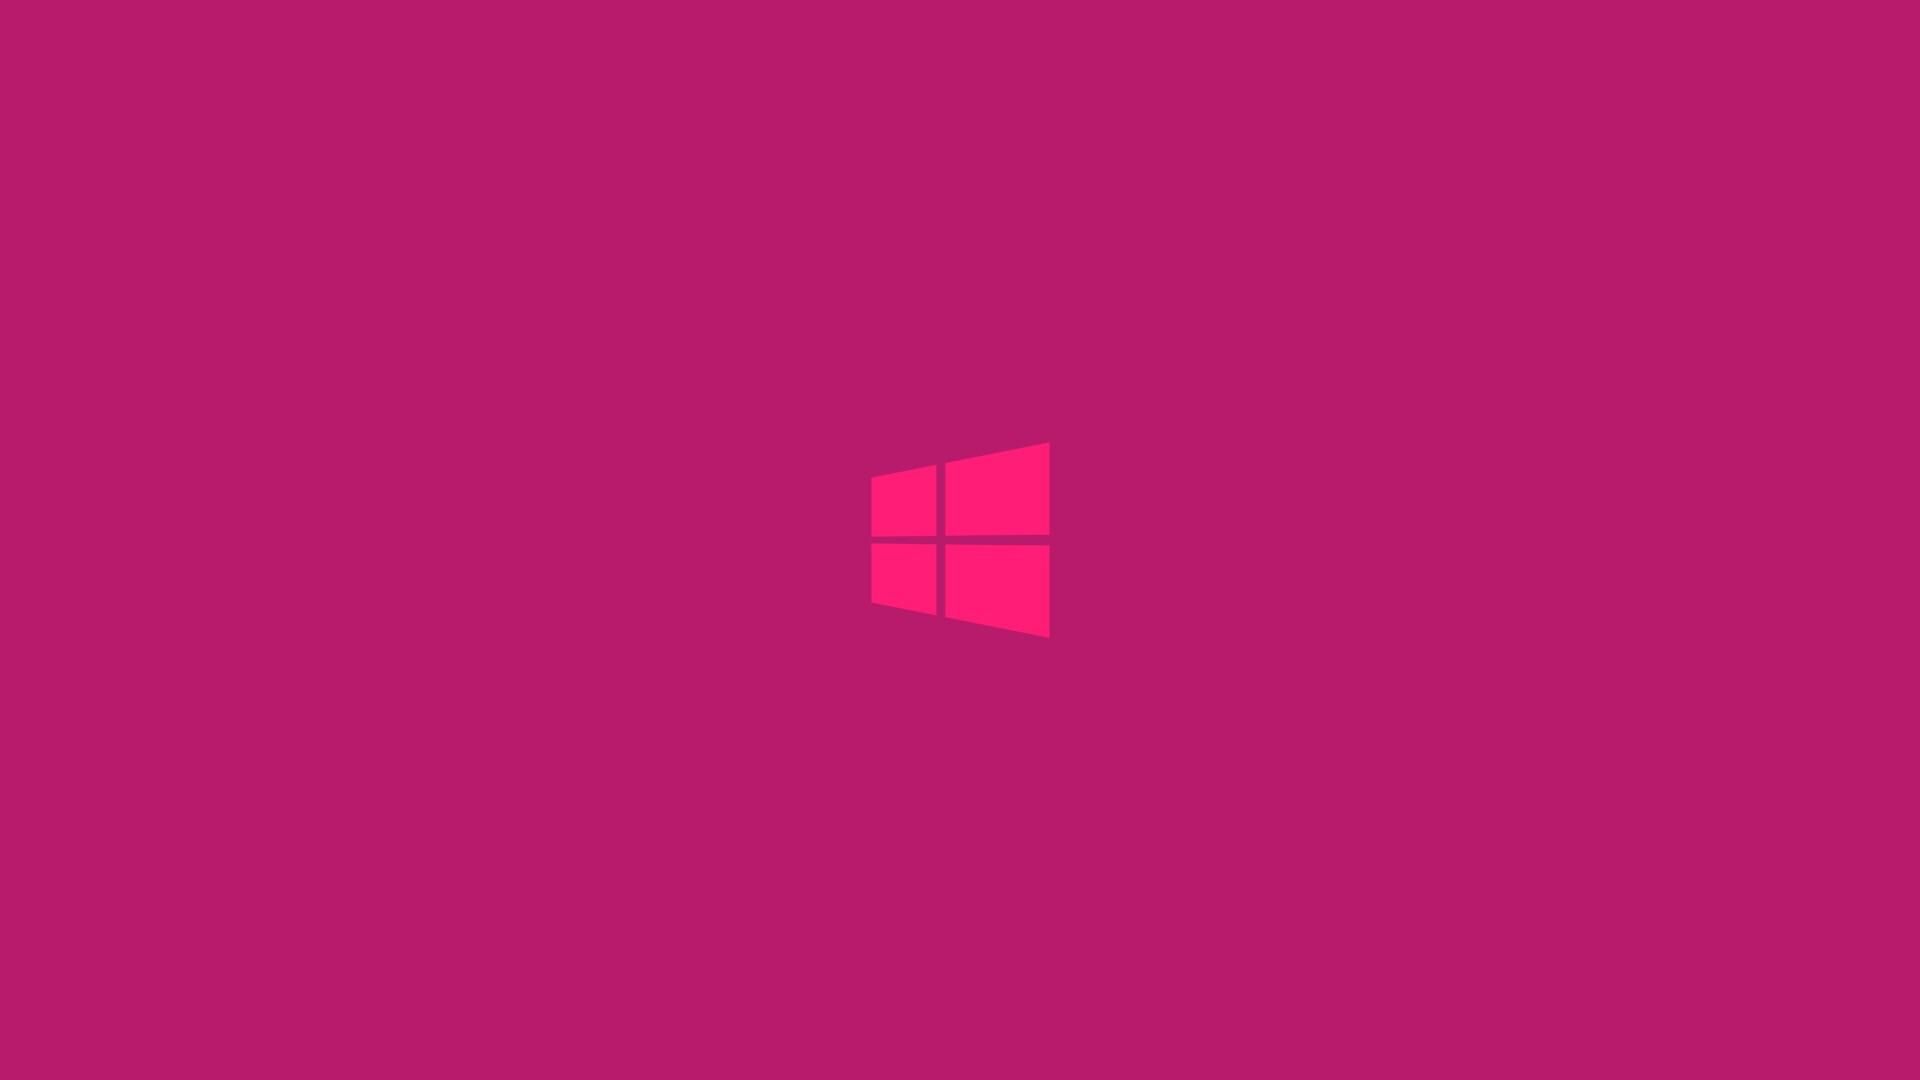 Wallpaper ID 354181  Technology Windows 11 Phone Wallpaper Pink  1080x2400 free download